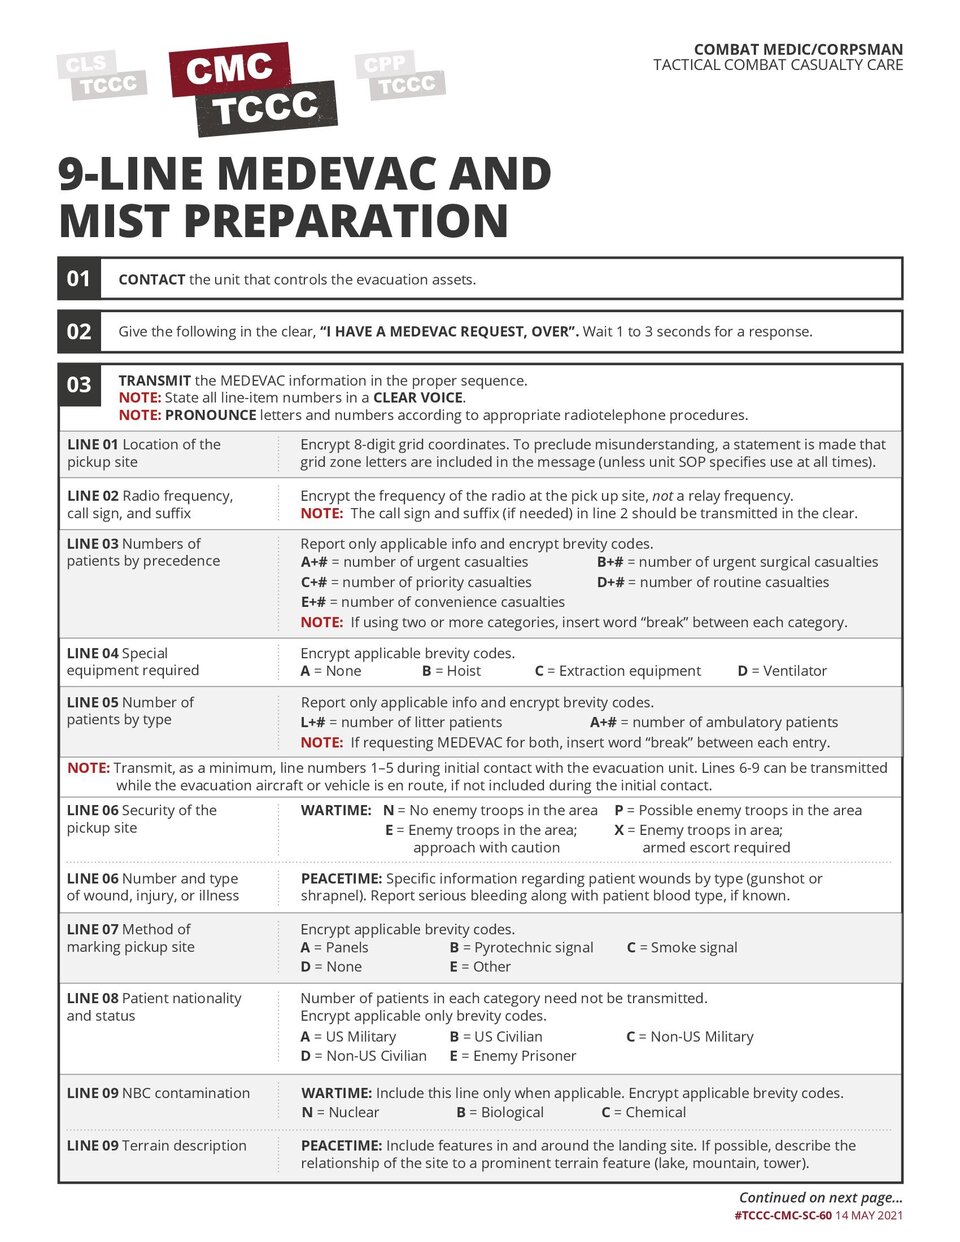 9-Line MEDEVAC and MIST Preparation